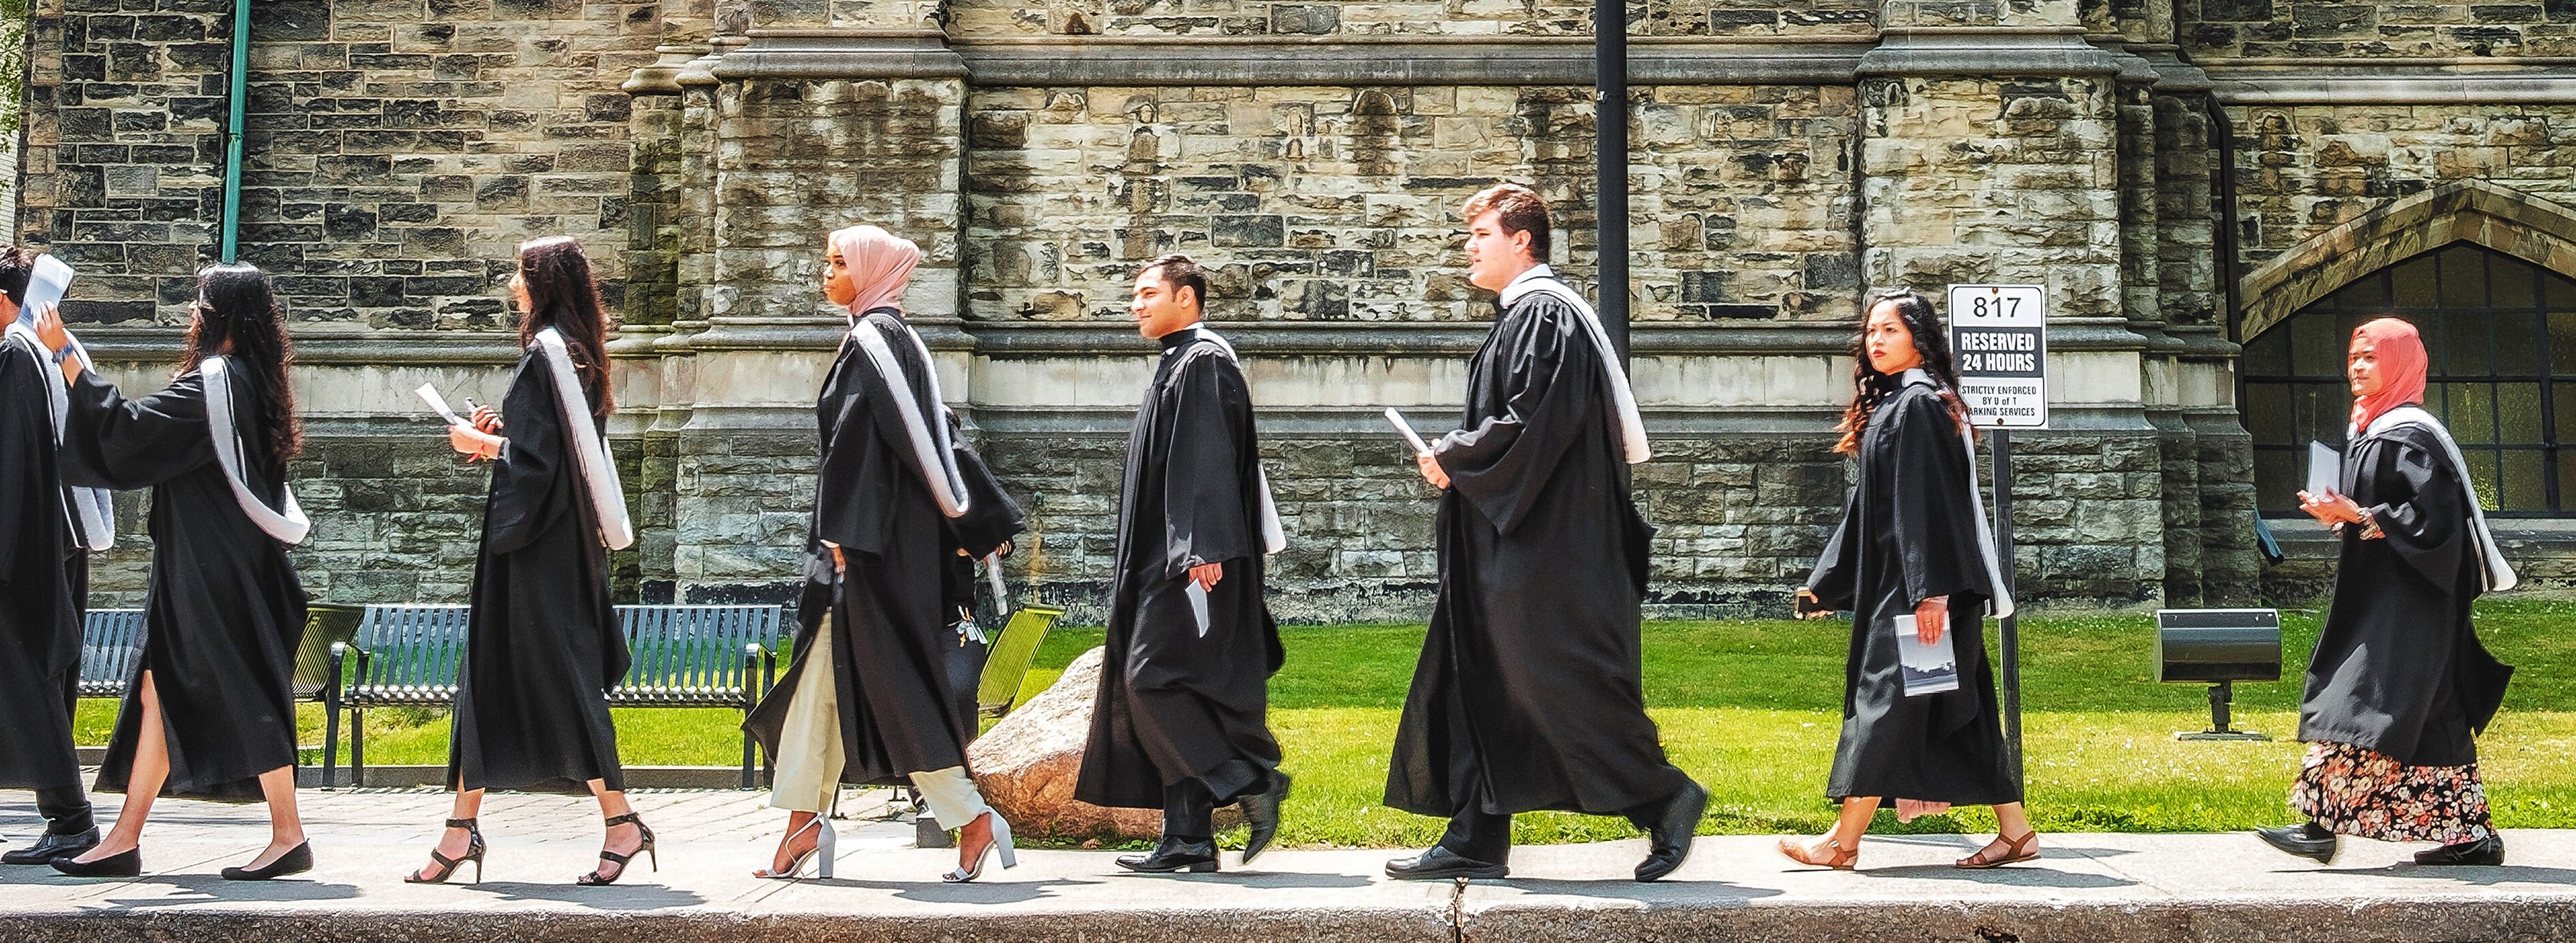 A group of U of T graduates walking in regalia.